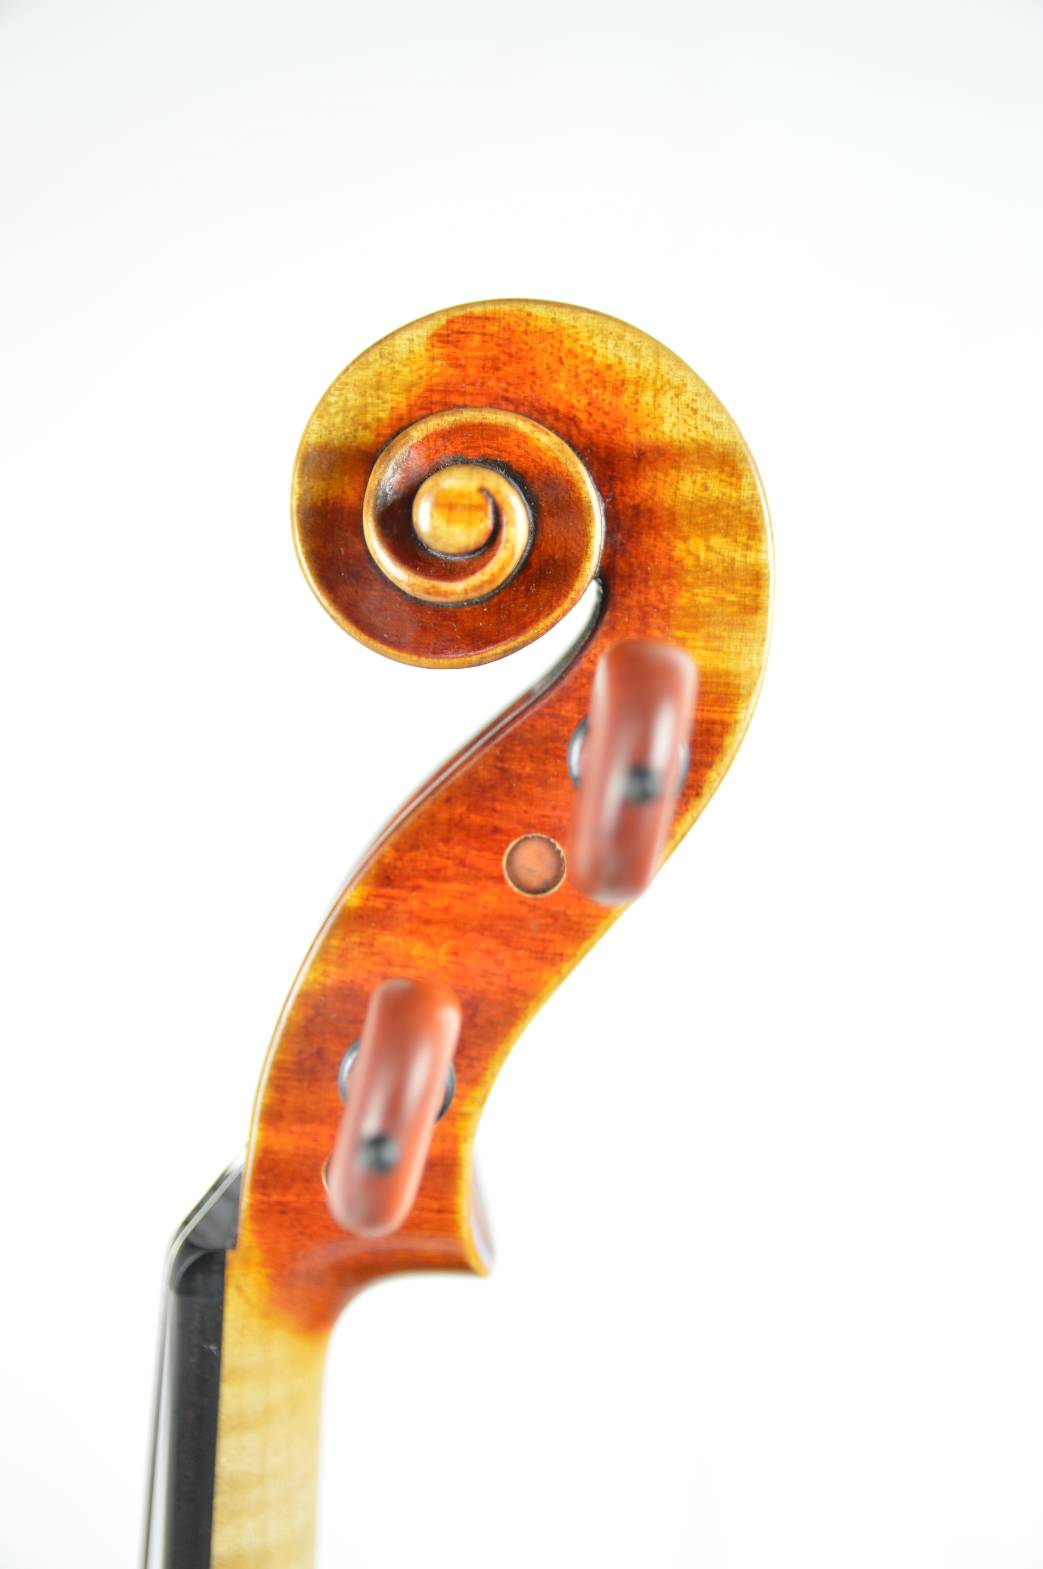 *Hiroshi Kasuya, Japan - Kawagoe, 2017, Model; Antonio Stradivari 1713 "Gibson, Huberman" 現在、埼玉県川越市に自身のアトリエをかまえている弦楽器製作家、糟谷宏氏の2017年ストラディヴァリモデルが、ここシマムラ […]